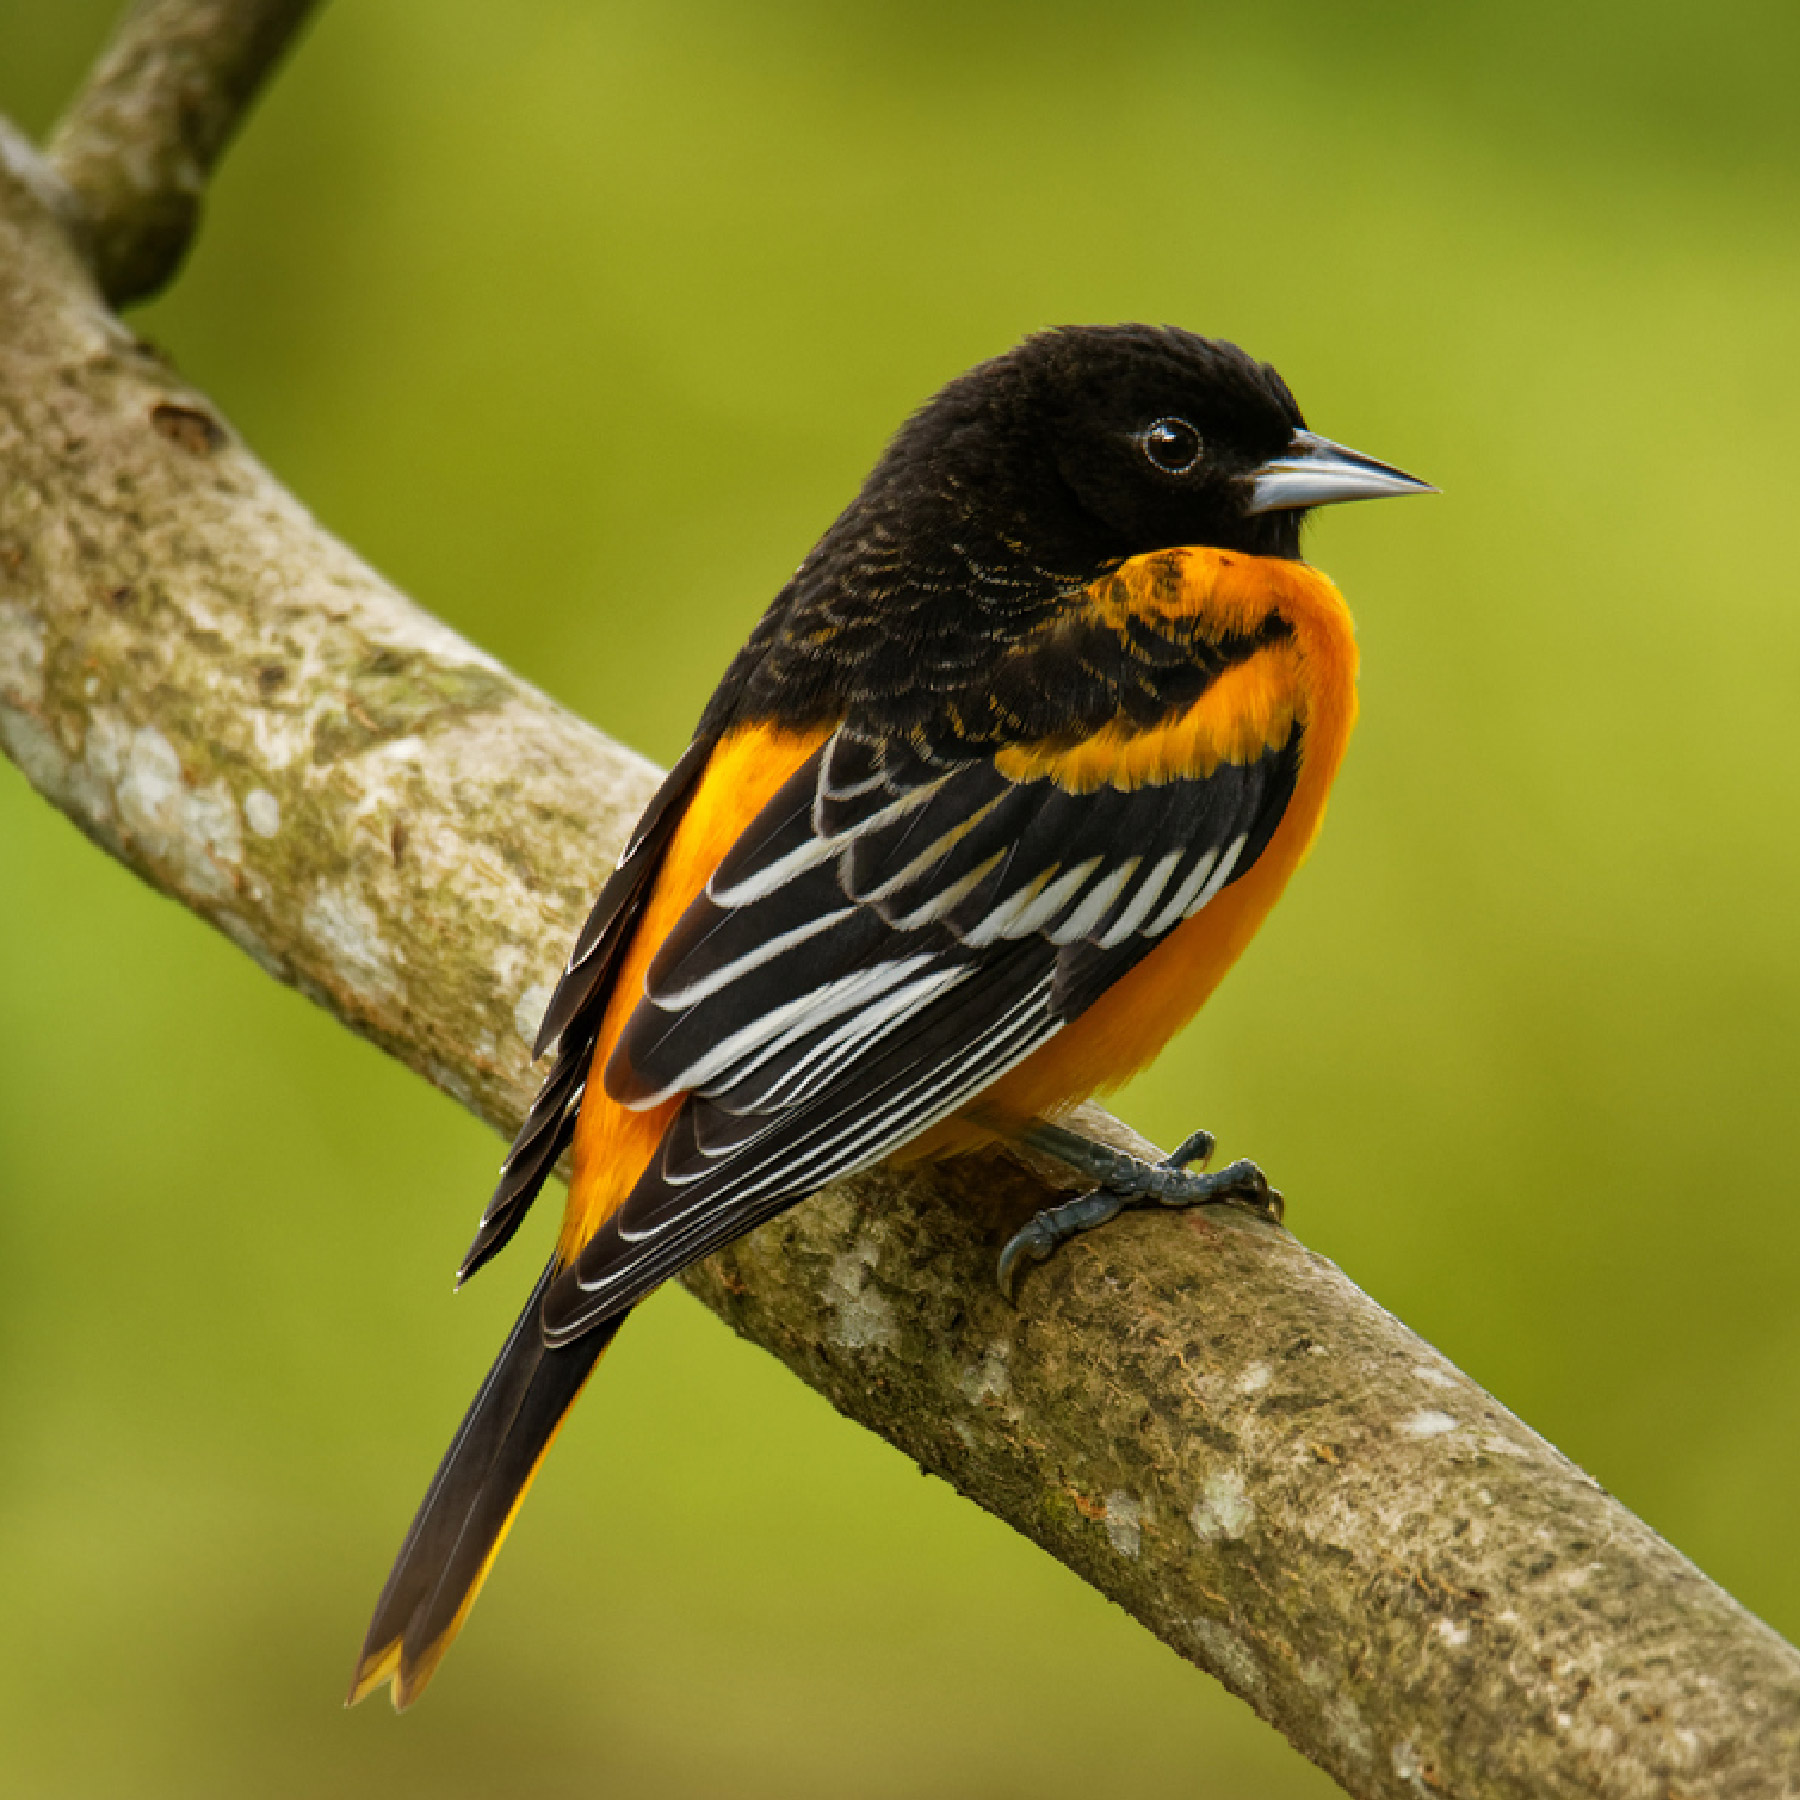 Black and orange bird sitting on tree branch